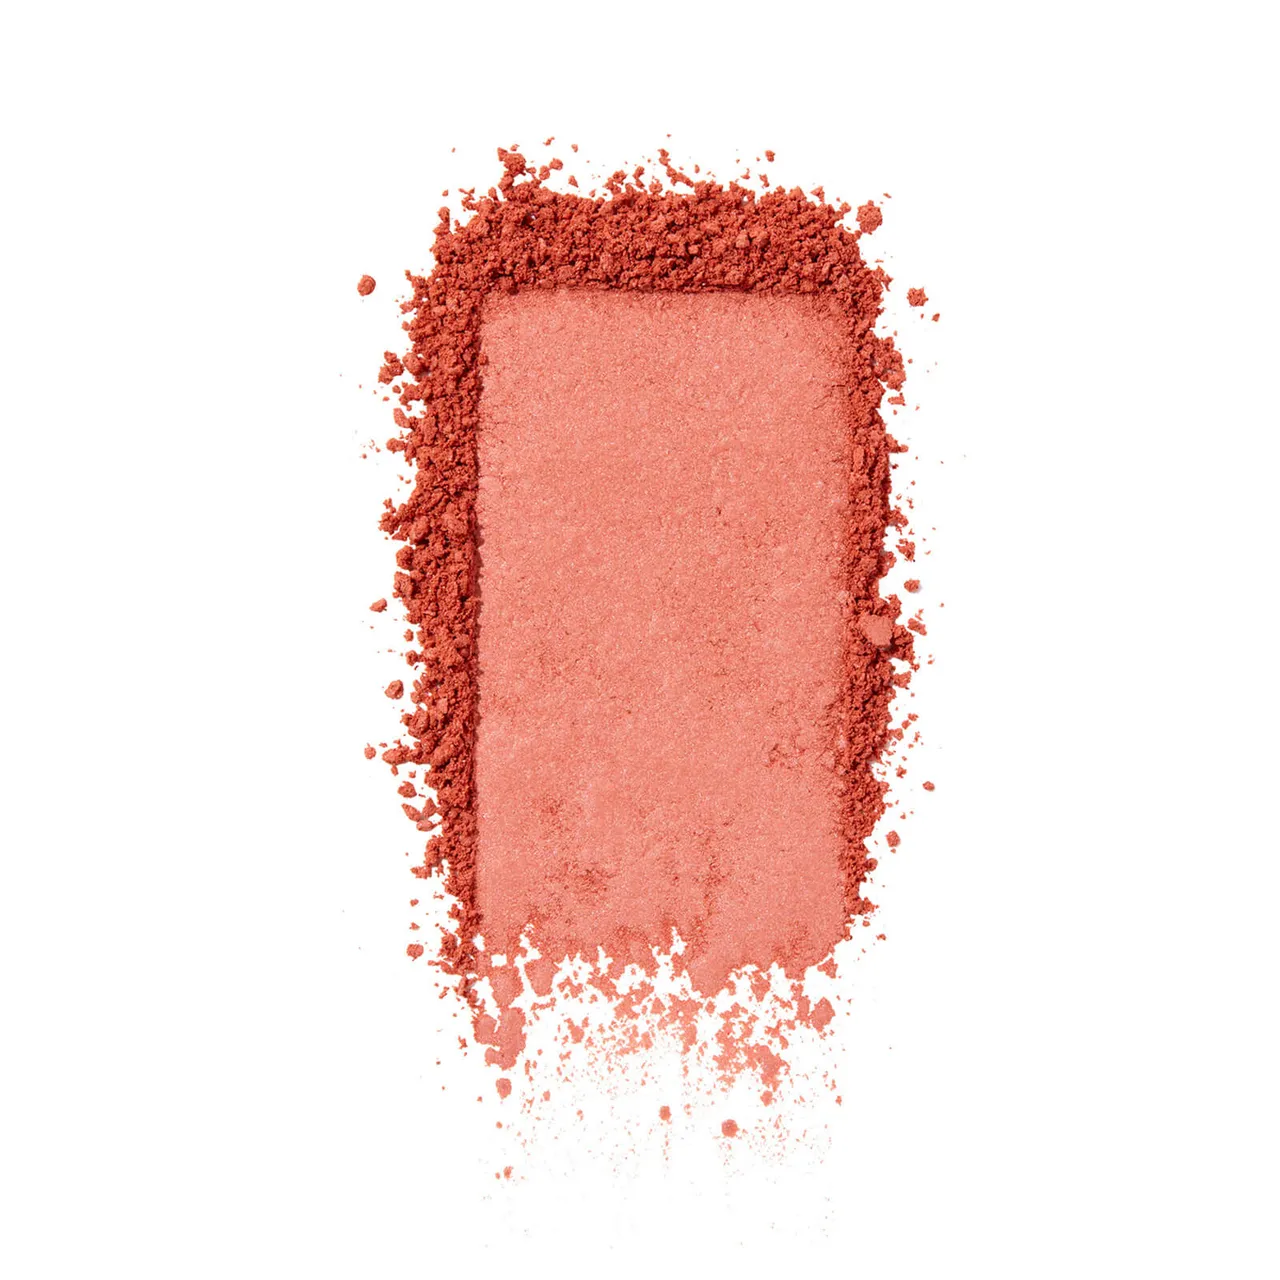 benefit Shellie Medium Pink Blush Powder 6g